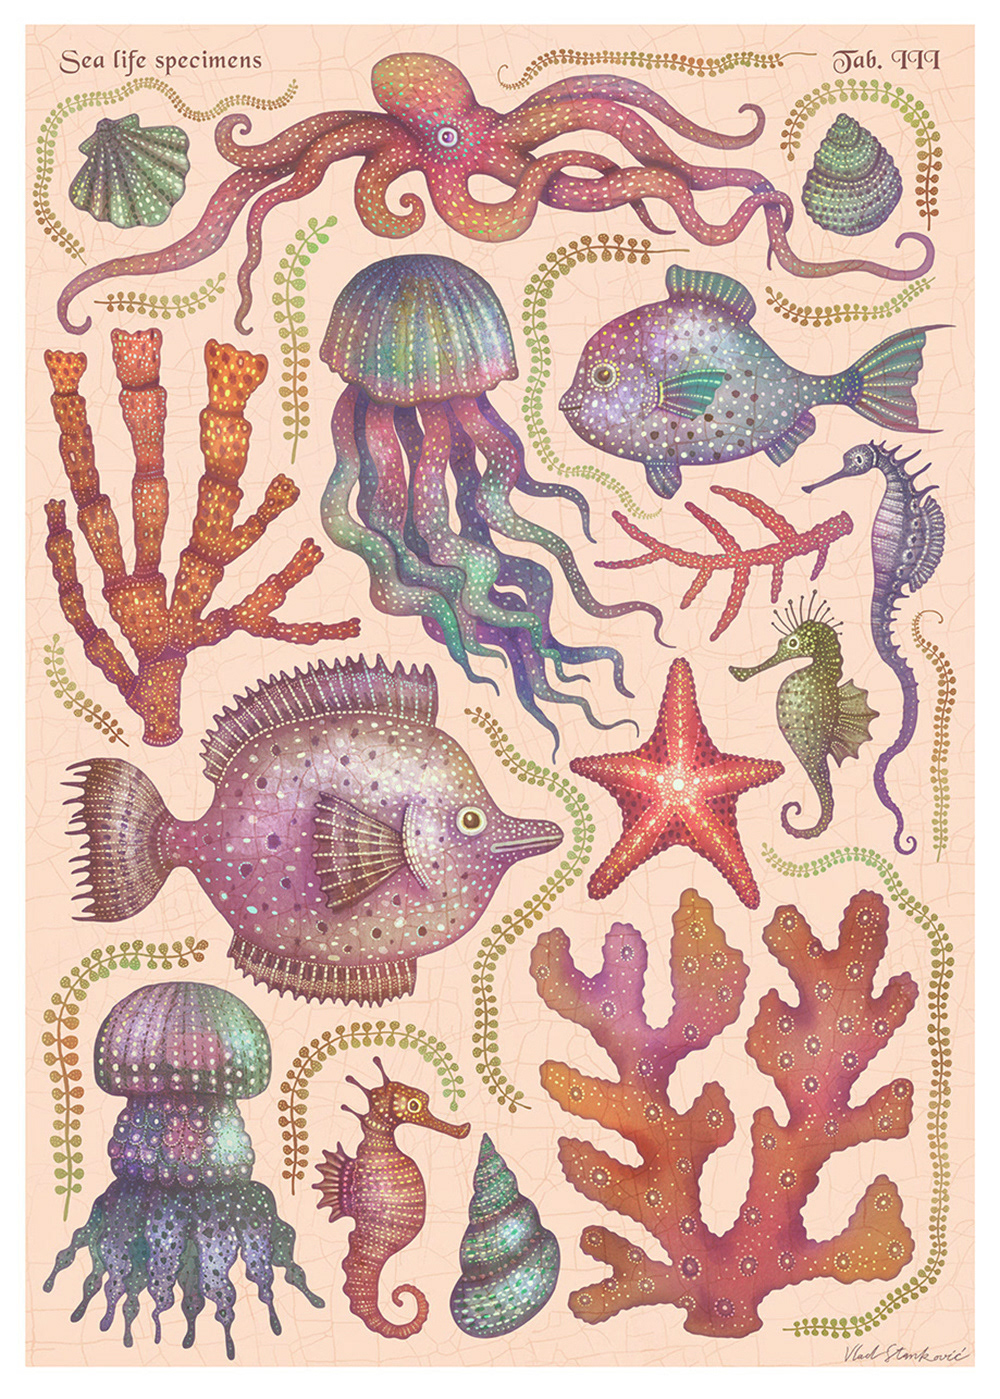 sea animals natural history SciArt sea life ILLUSTRATION  cabinet of curiosities art marine life sea creatures